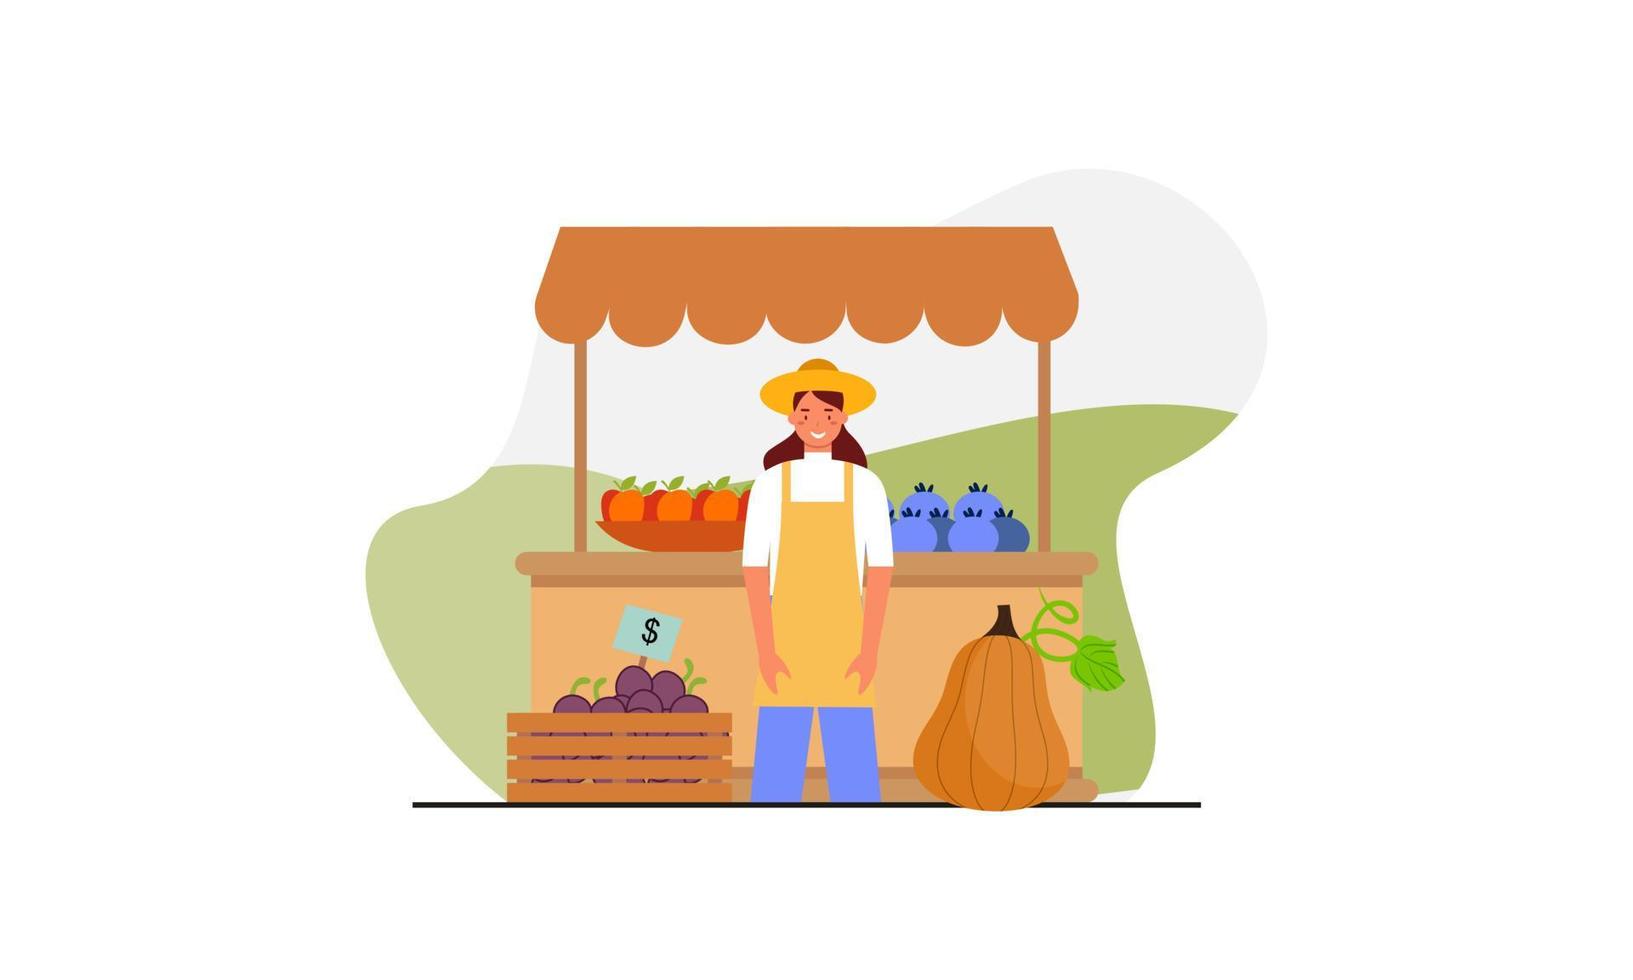 vector de ilustración de concepto de mercado de agricultores